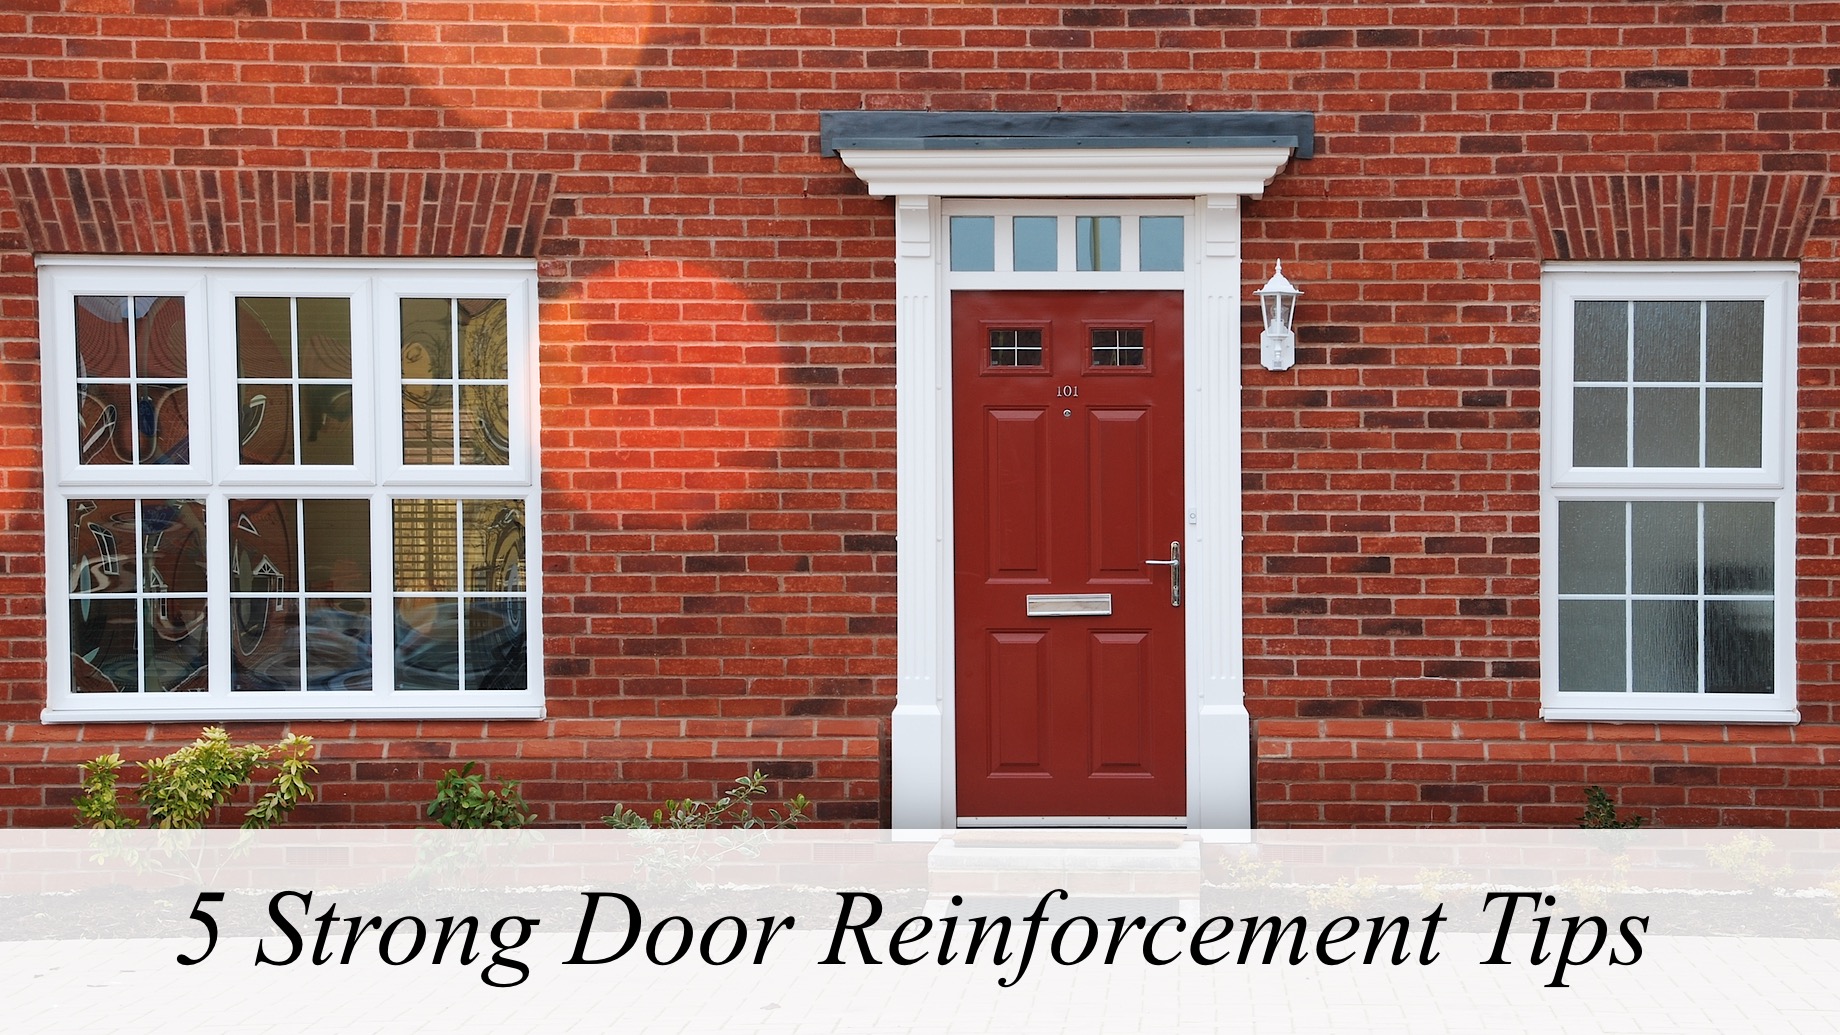 5 Strong Door Reinforcement Tips in the United Kingdom